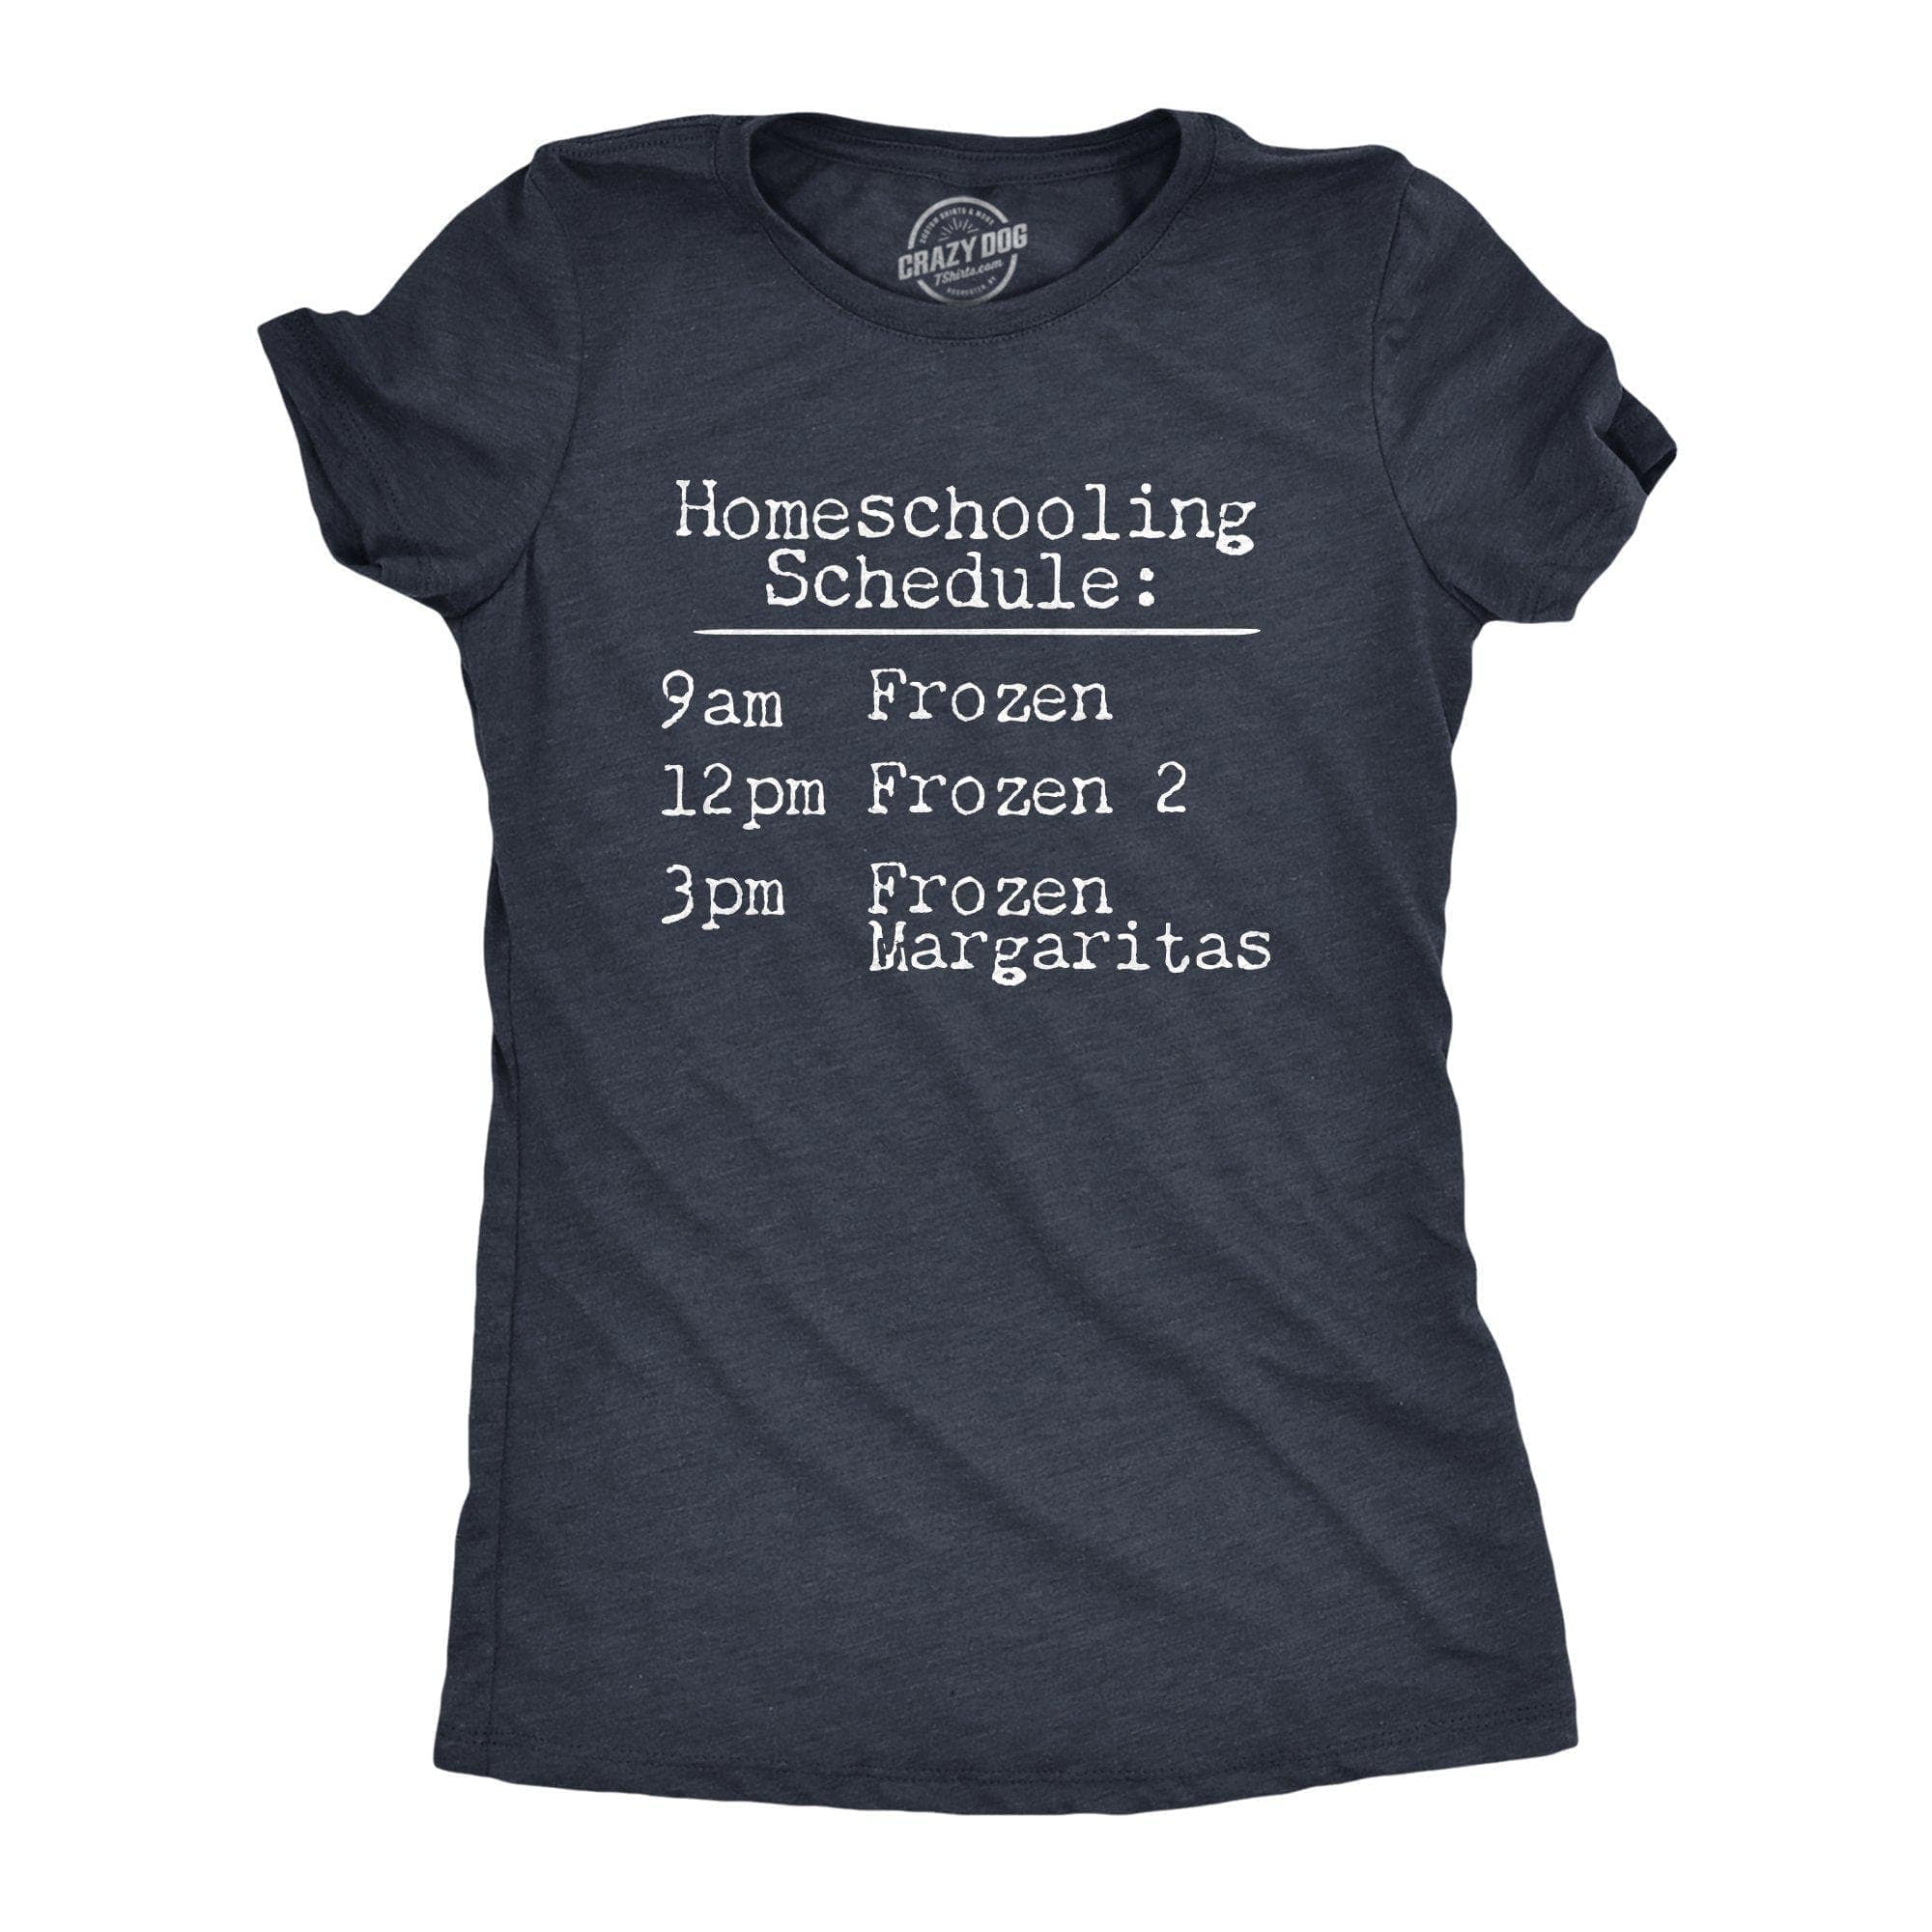 Homeschooling Schedule Women's Tshirt - Crazy Dog T-Shirts